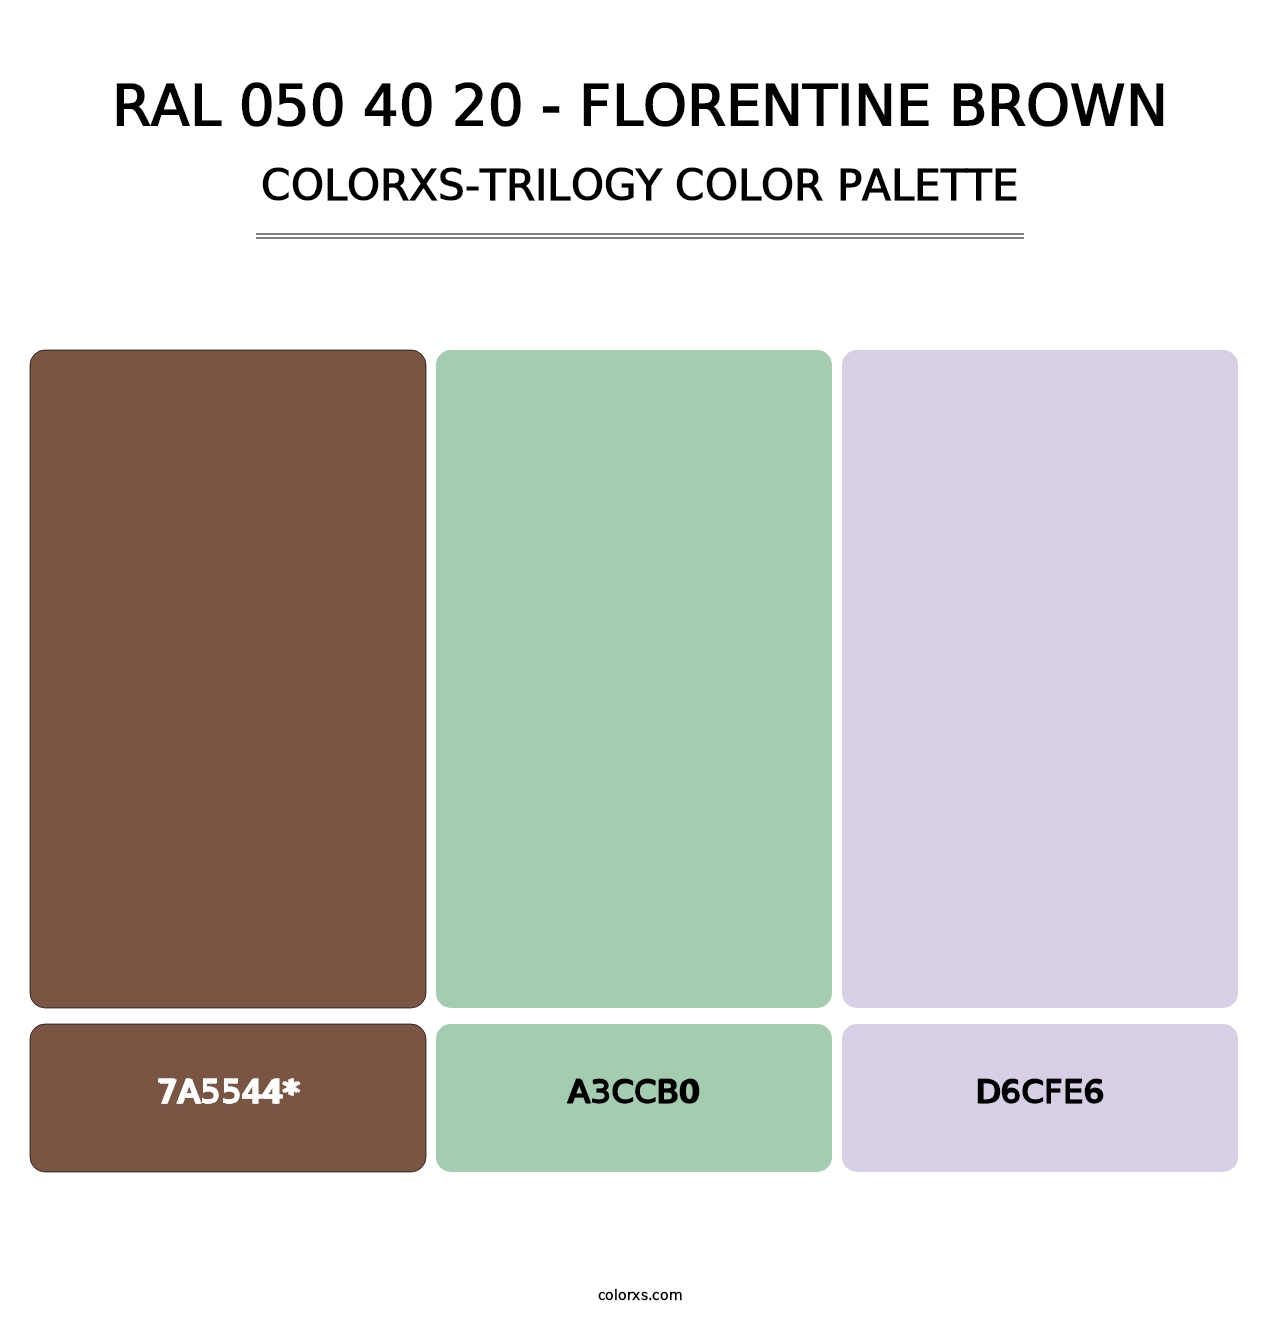 RAL 050 40 20 - Florentine Brown - Colorxs Trilogy Palette